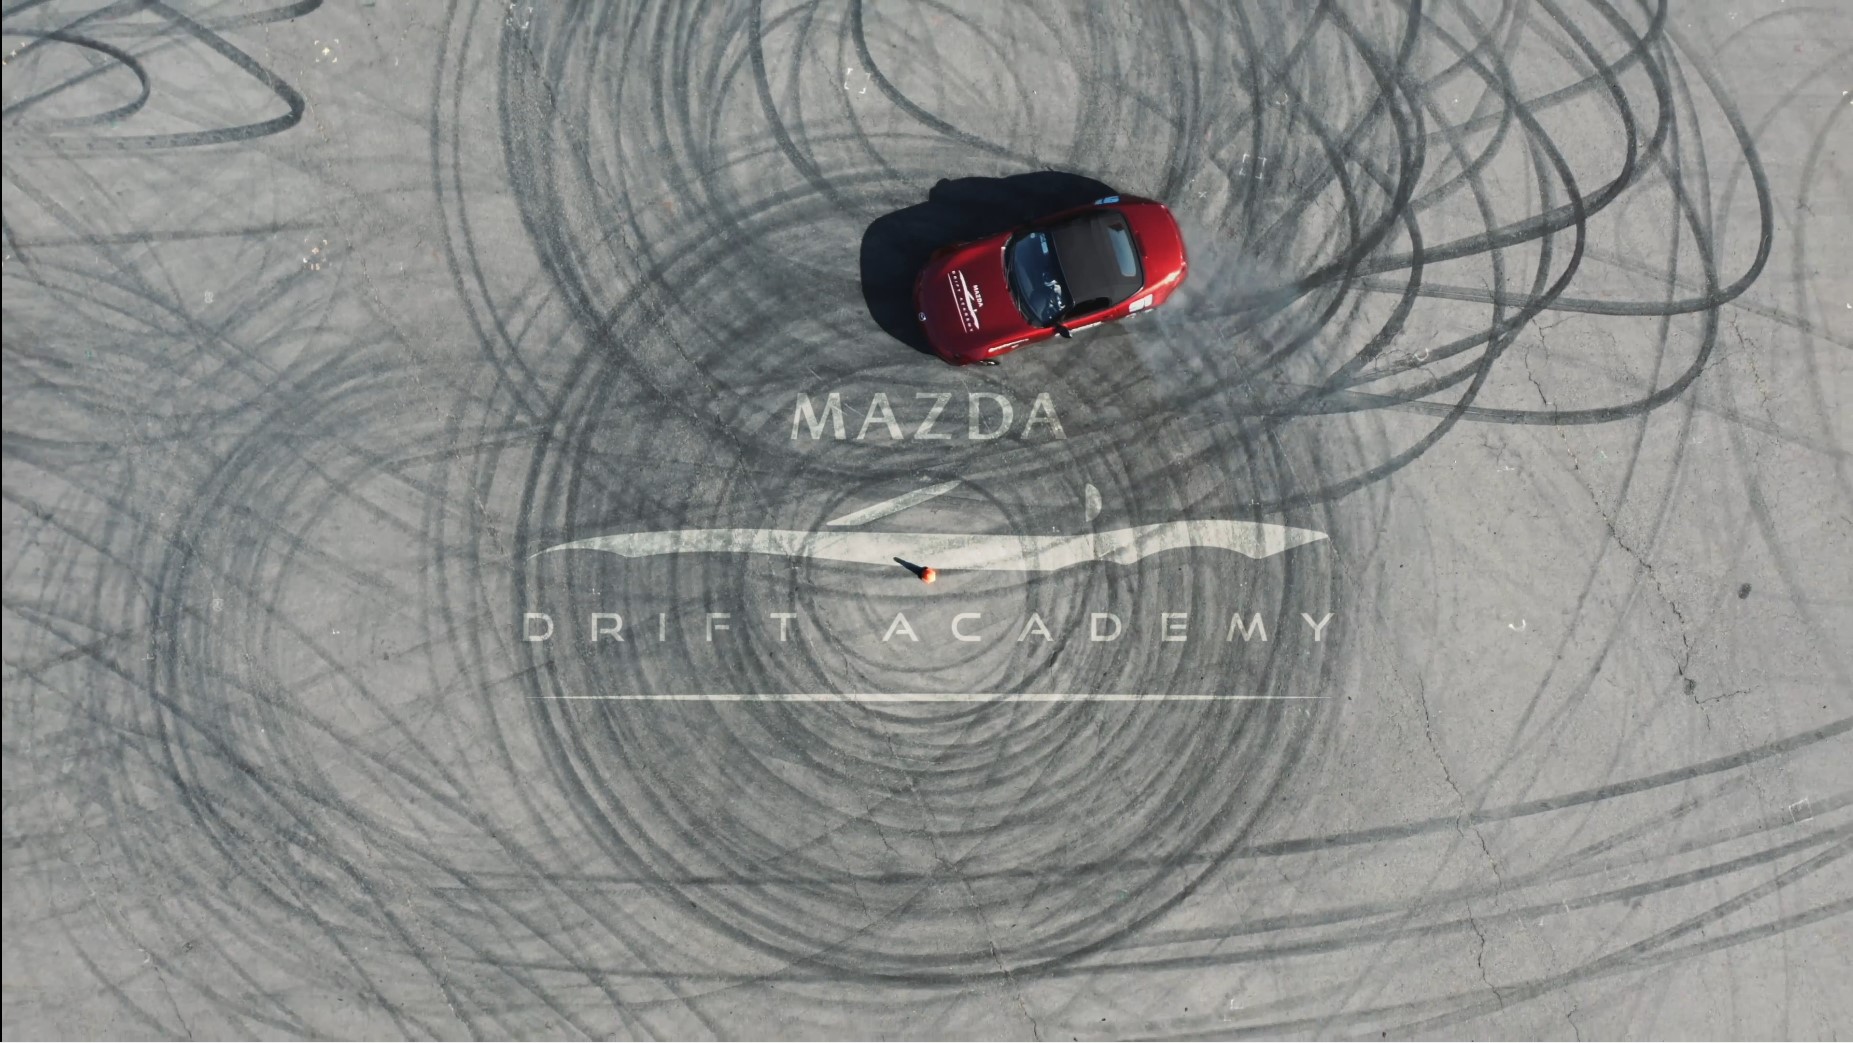 Mazda Drift Academy concluye su primera etapa